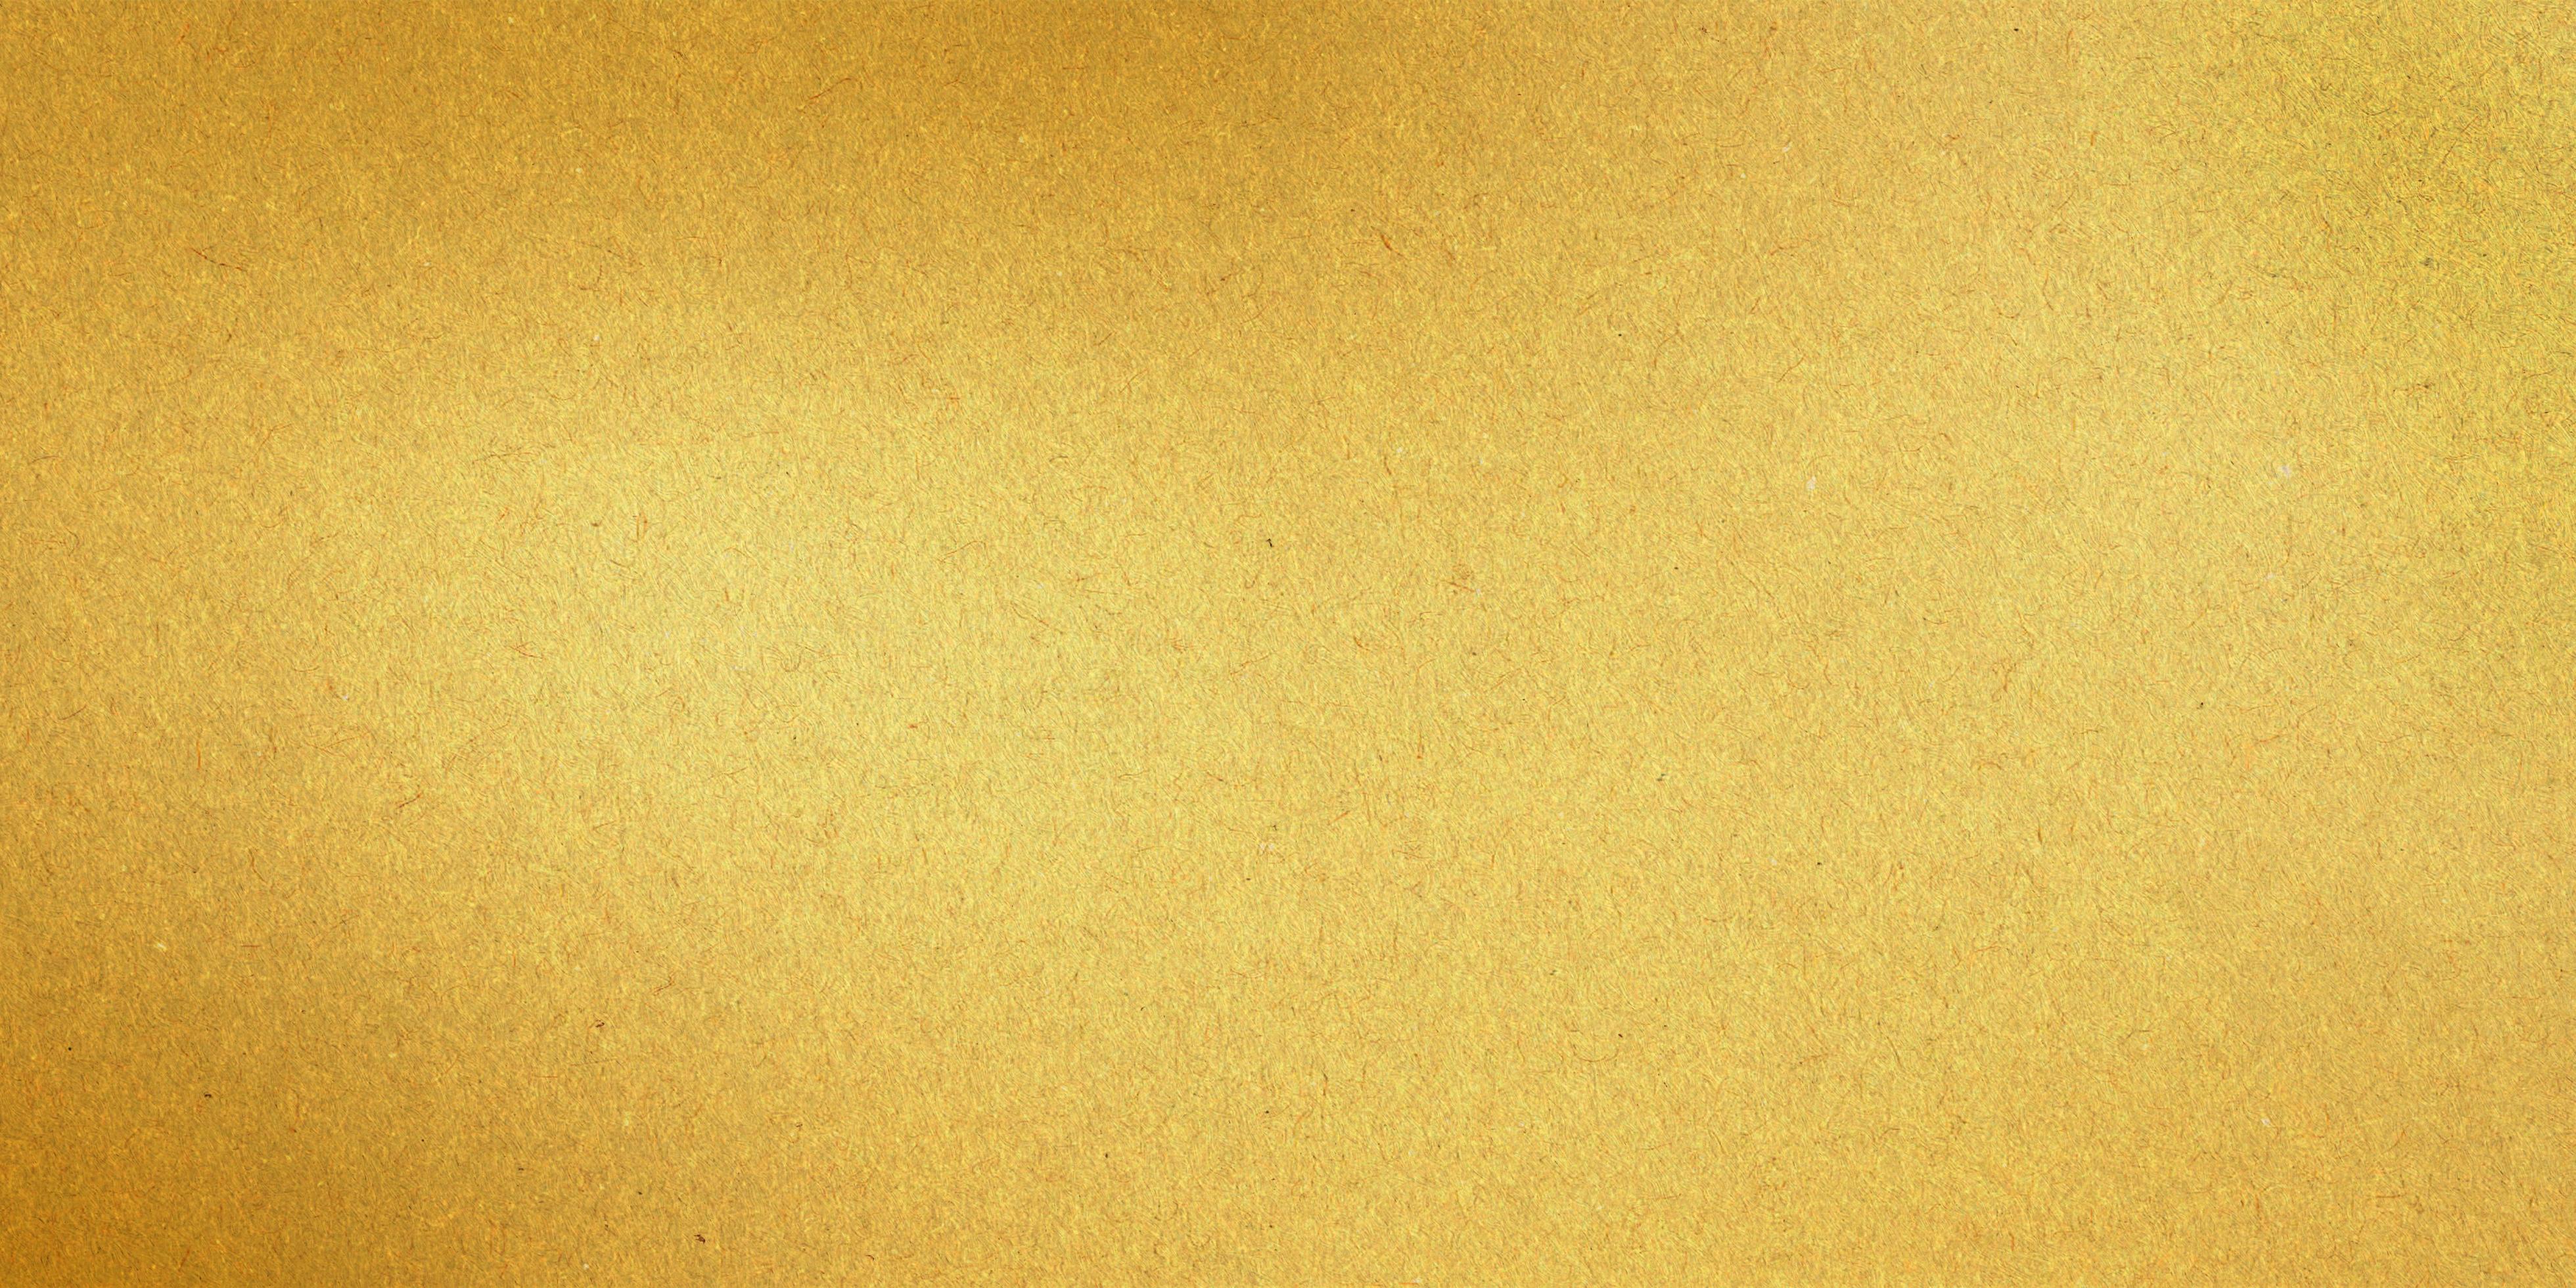 fondo dorado metalico 1907843 Foto de stock en Vecteezy